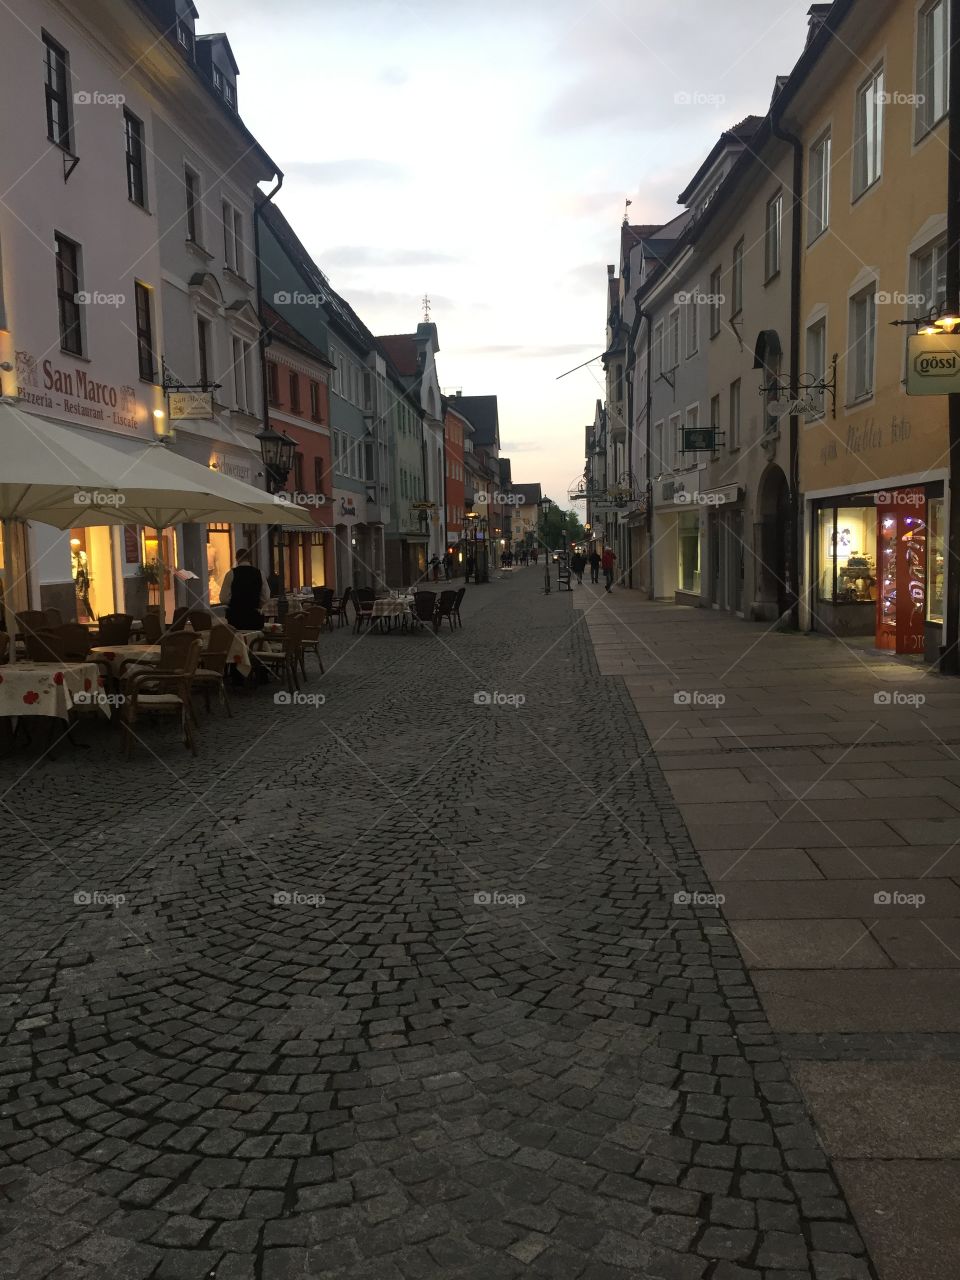 German town